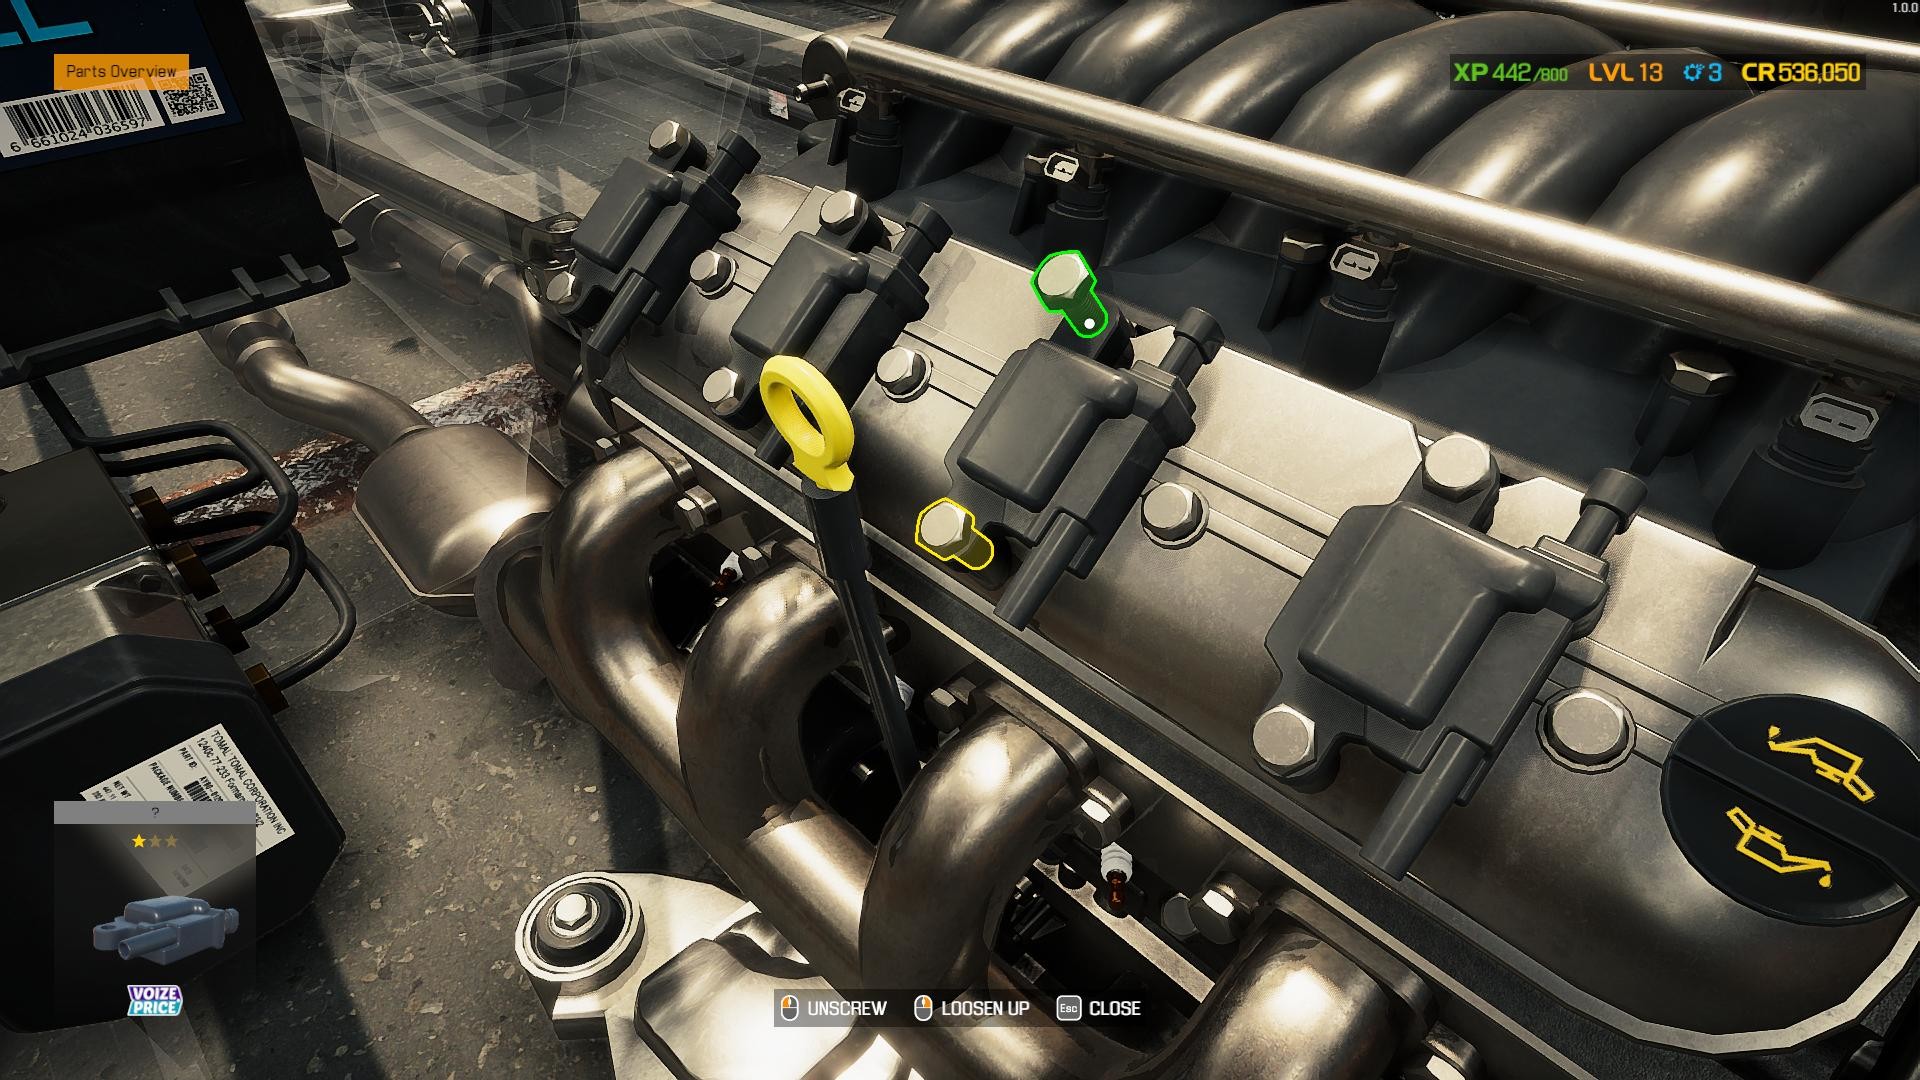 Car Mechanic Simulator 2021 EU XBOX One / Xbox Series X,S / Windows 10 CD Key